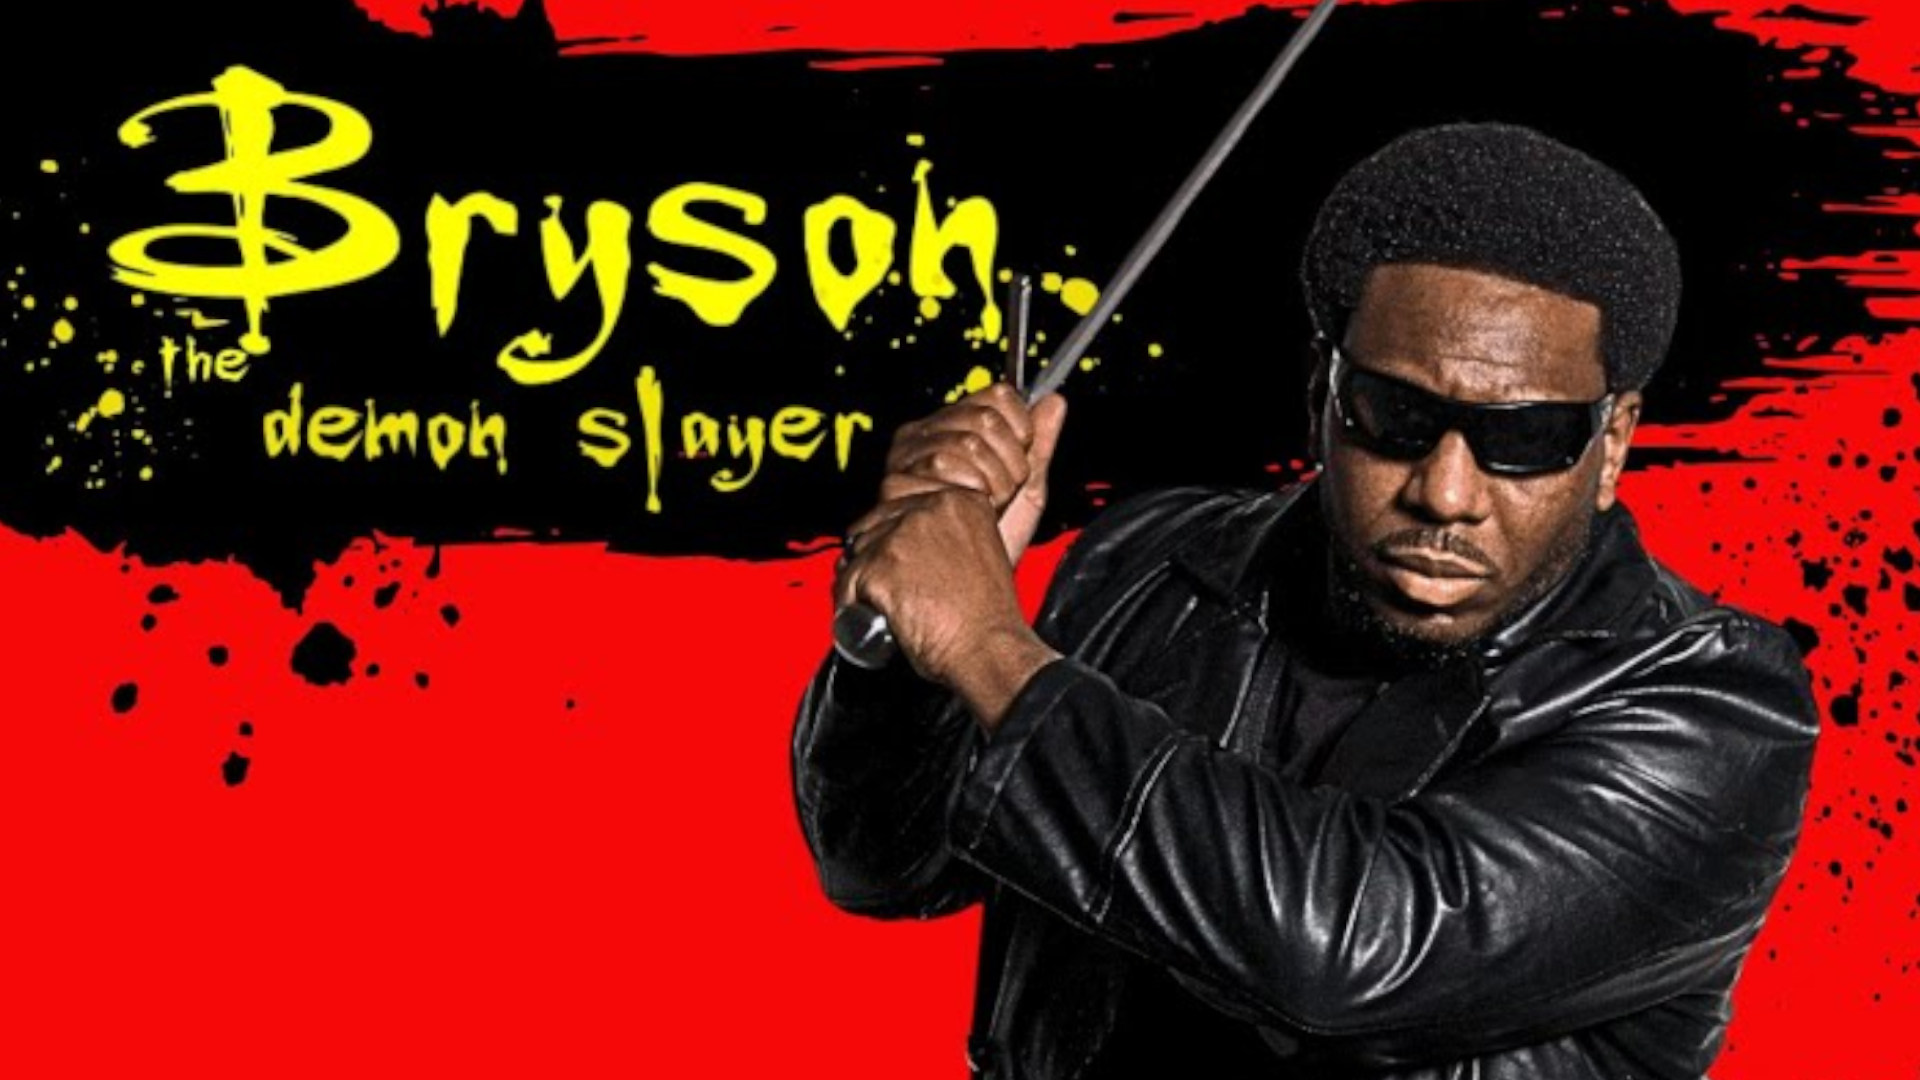 Bryson Gray’s “Bryson, The Demon Slayer” Album Hits #7 on iTunes